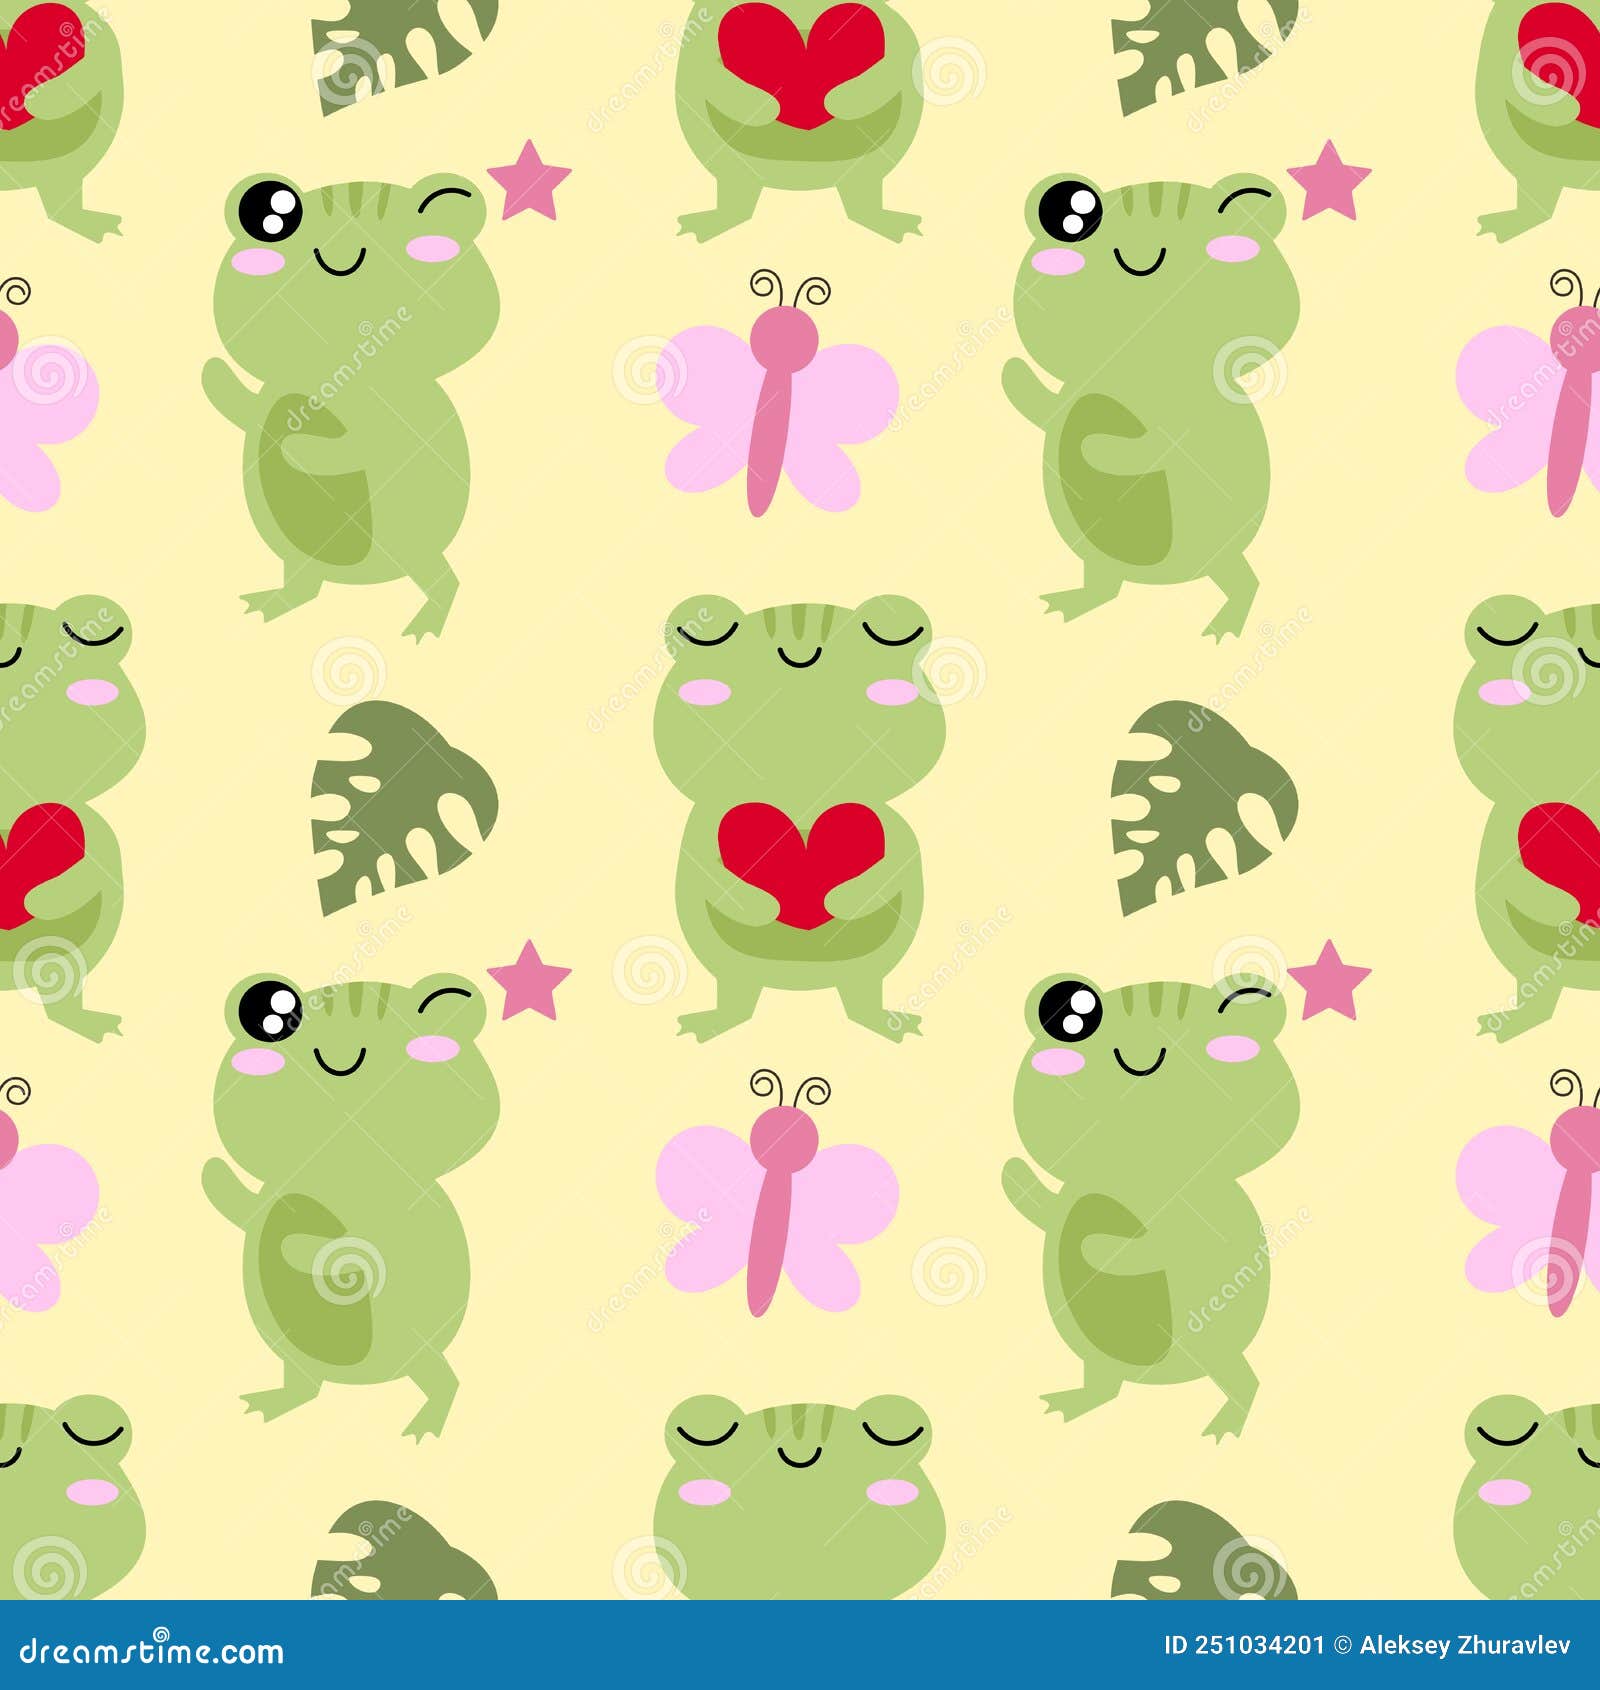 Cute Funny Green Frog Seamless Pattern. Vector Hand Drawn Cartoon ...